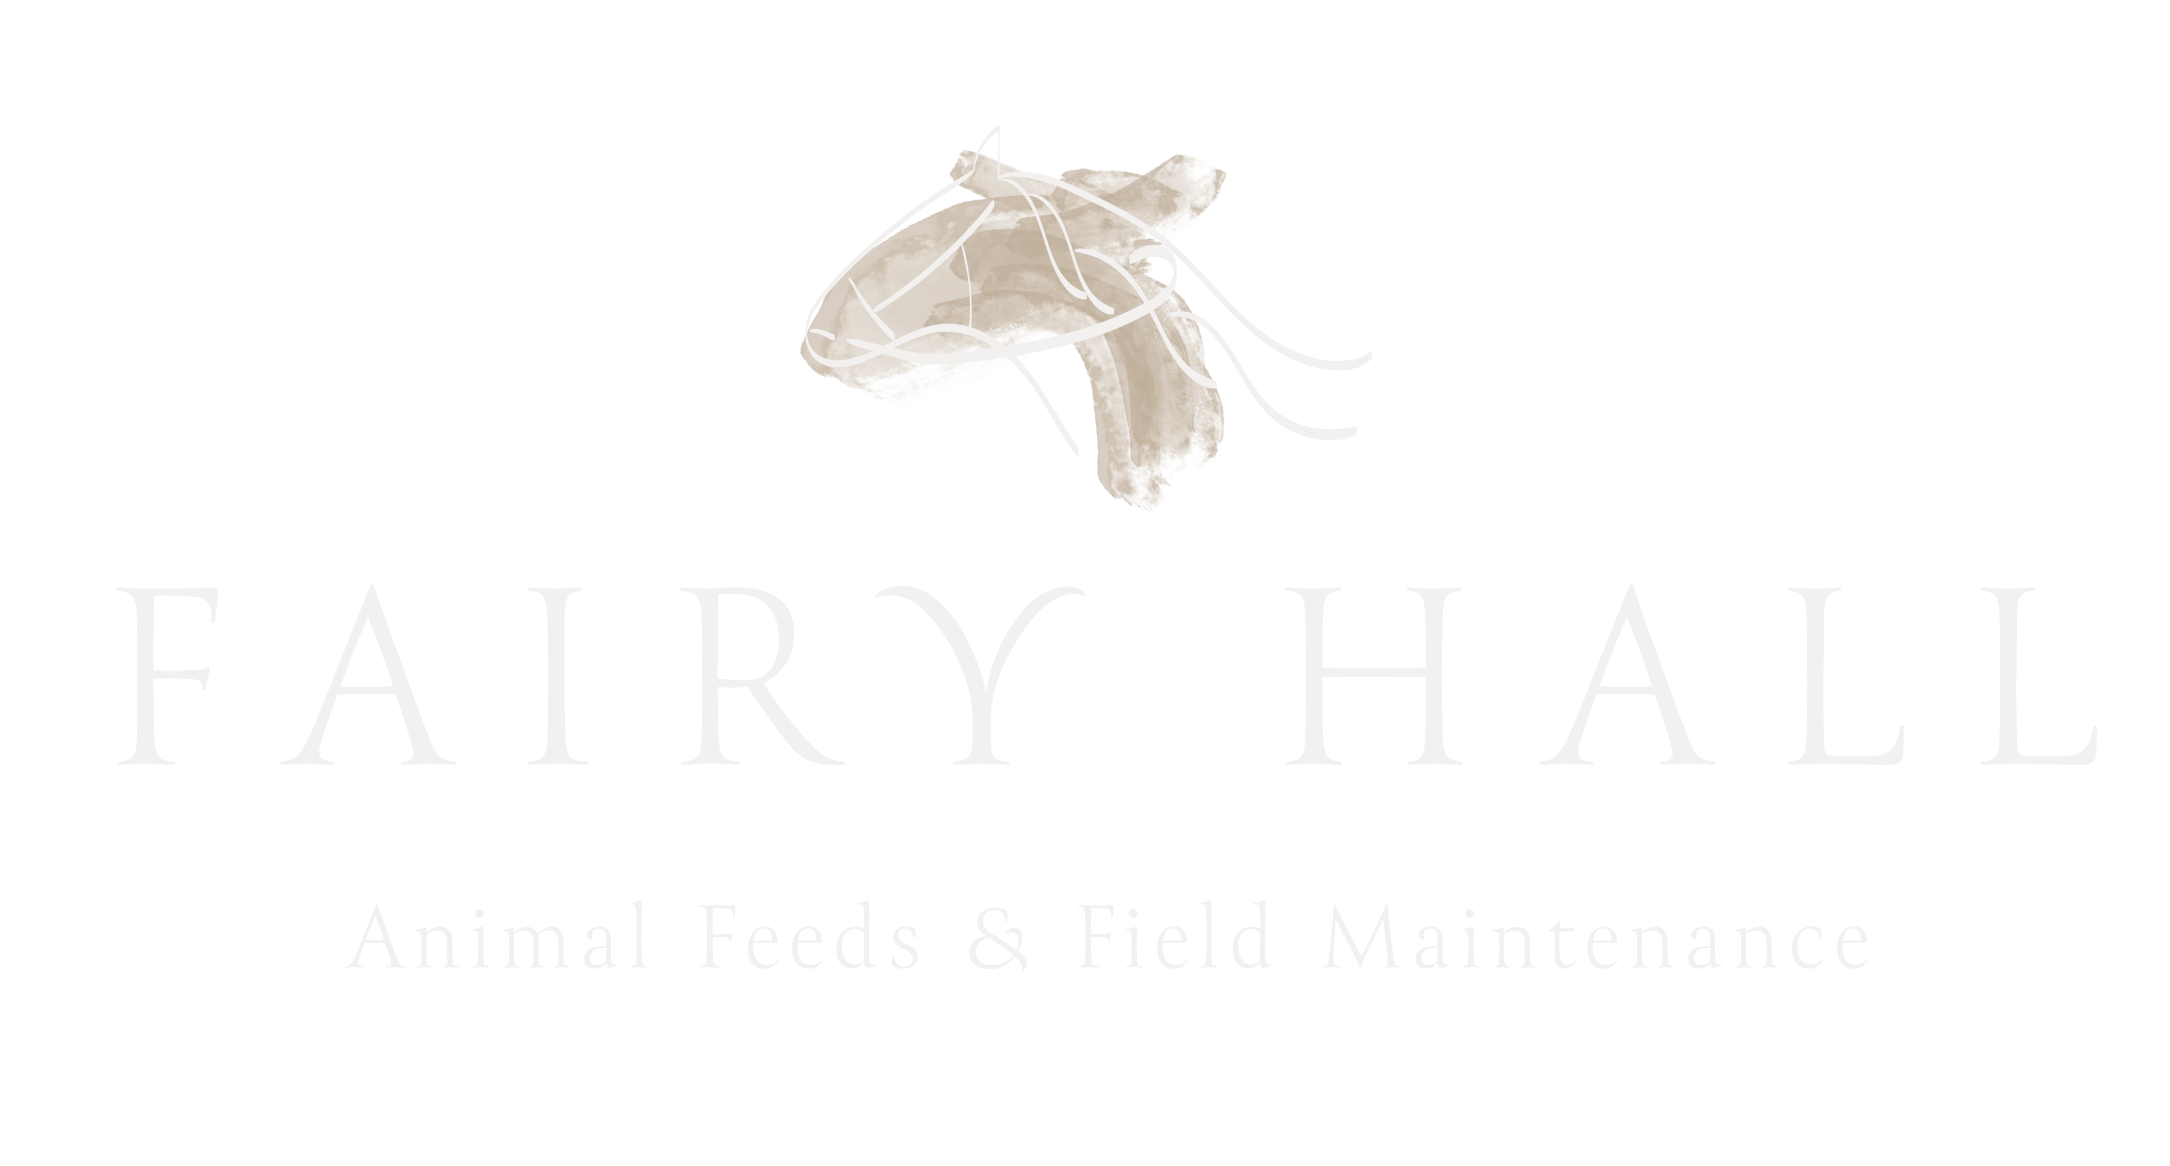 Fairy Hall Animal Feeds &amp; Field Maintenance